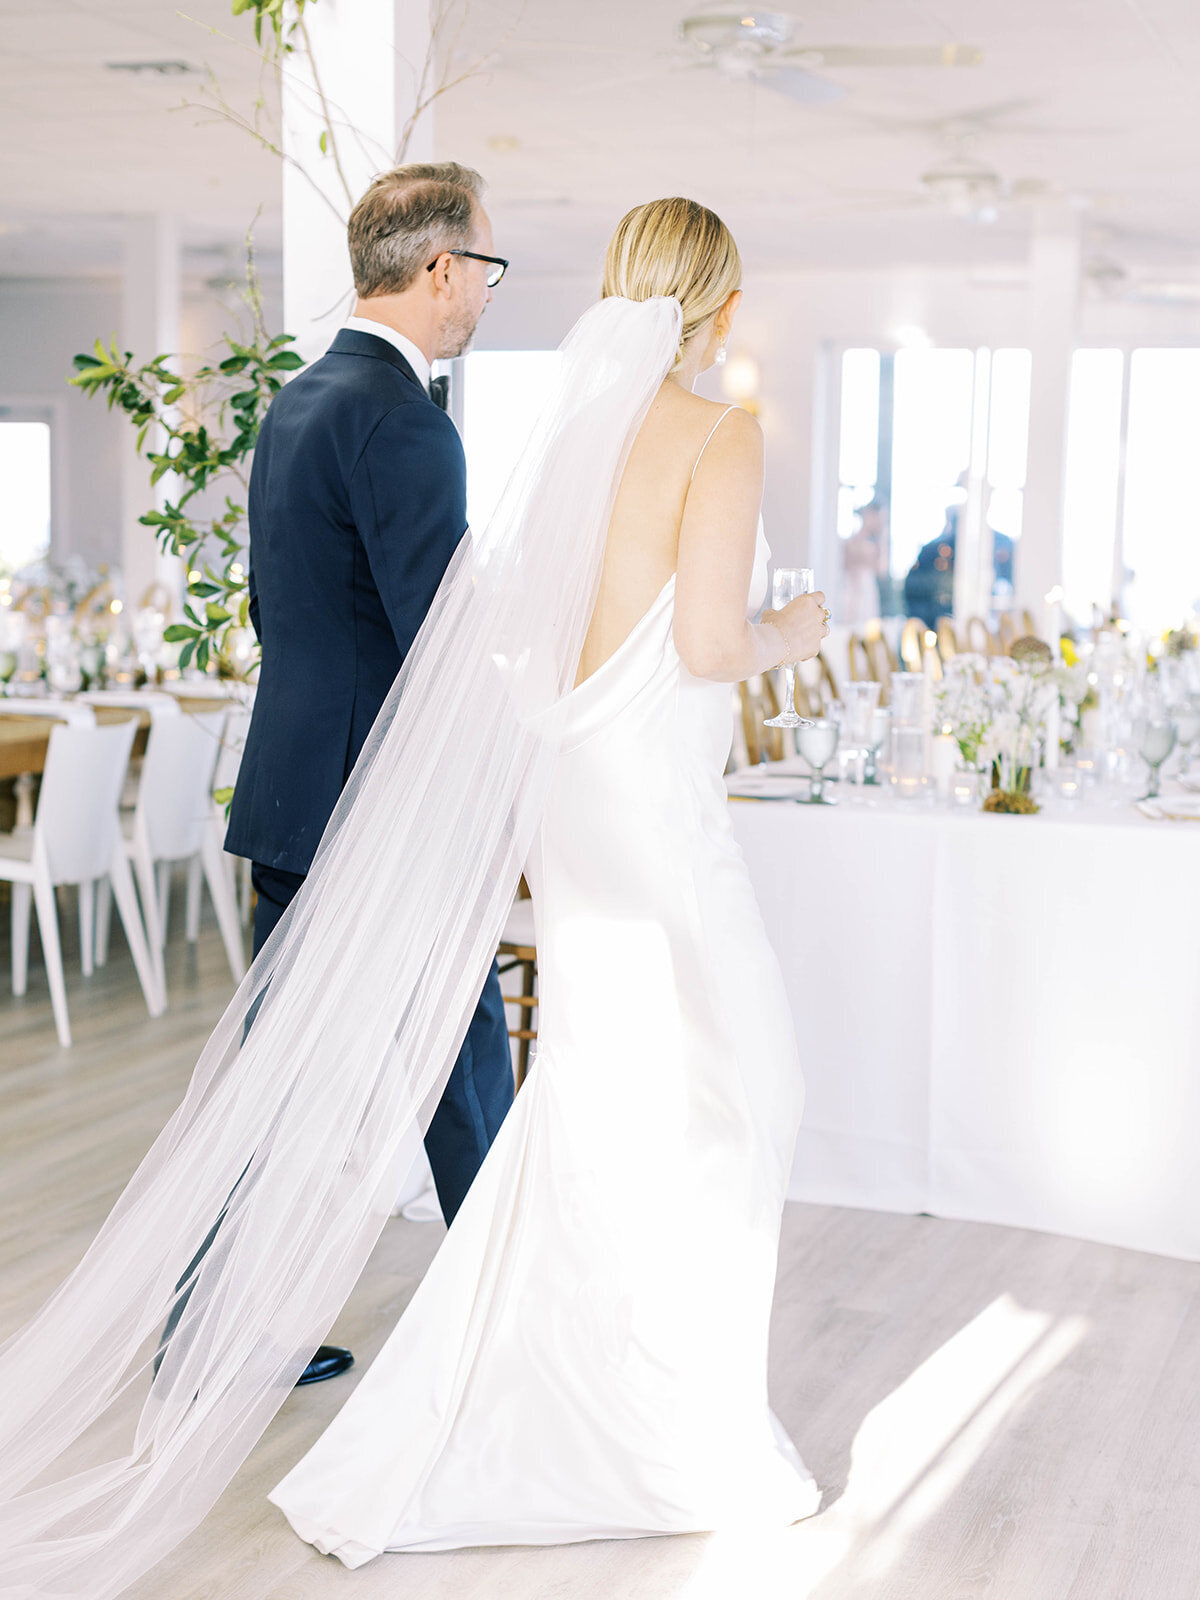 tess & DB - bride & groom - Chrissy O_Neill & Co. - South Florida Wedding Photographer-102